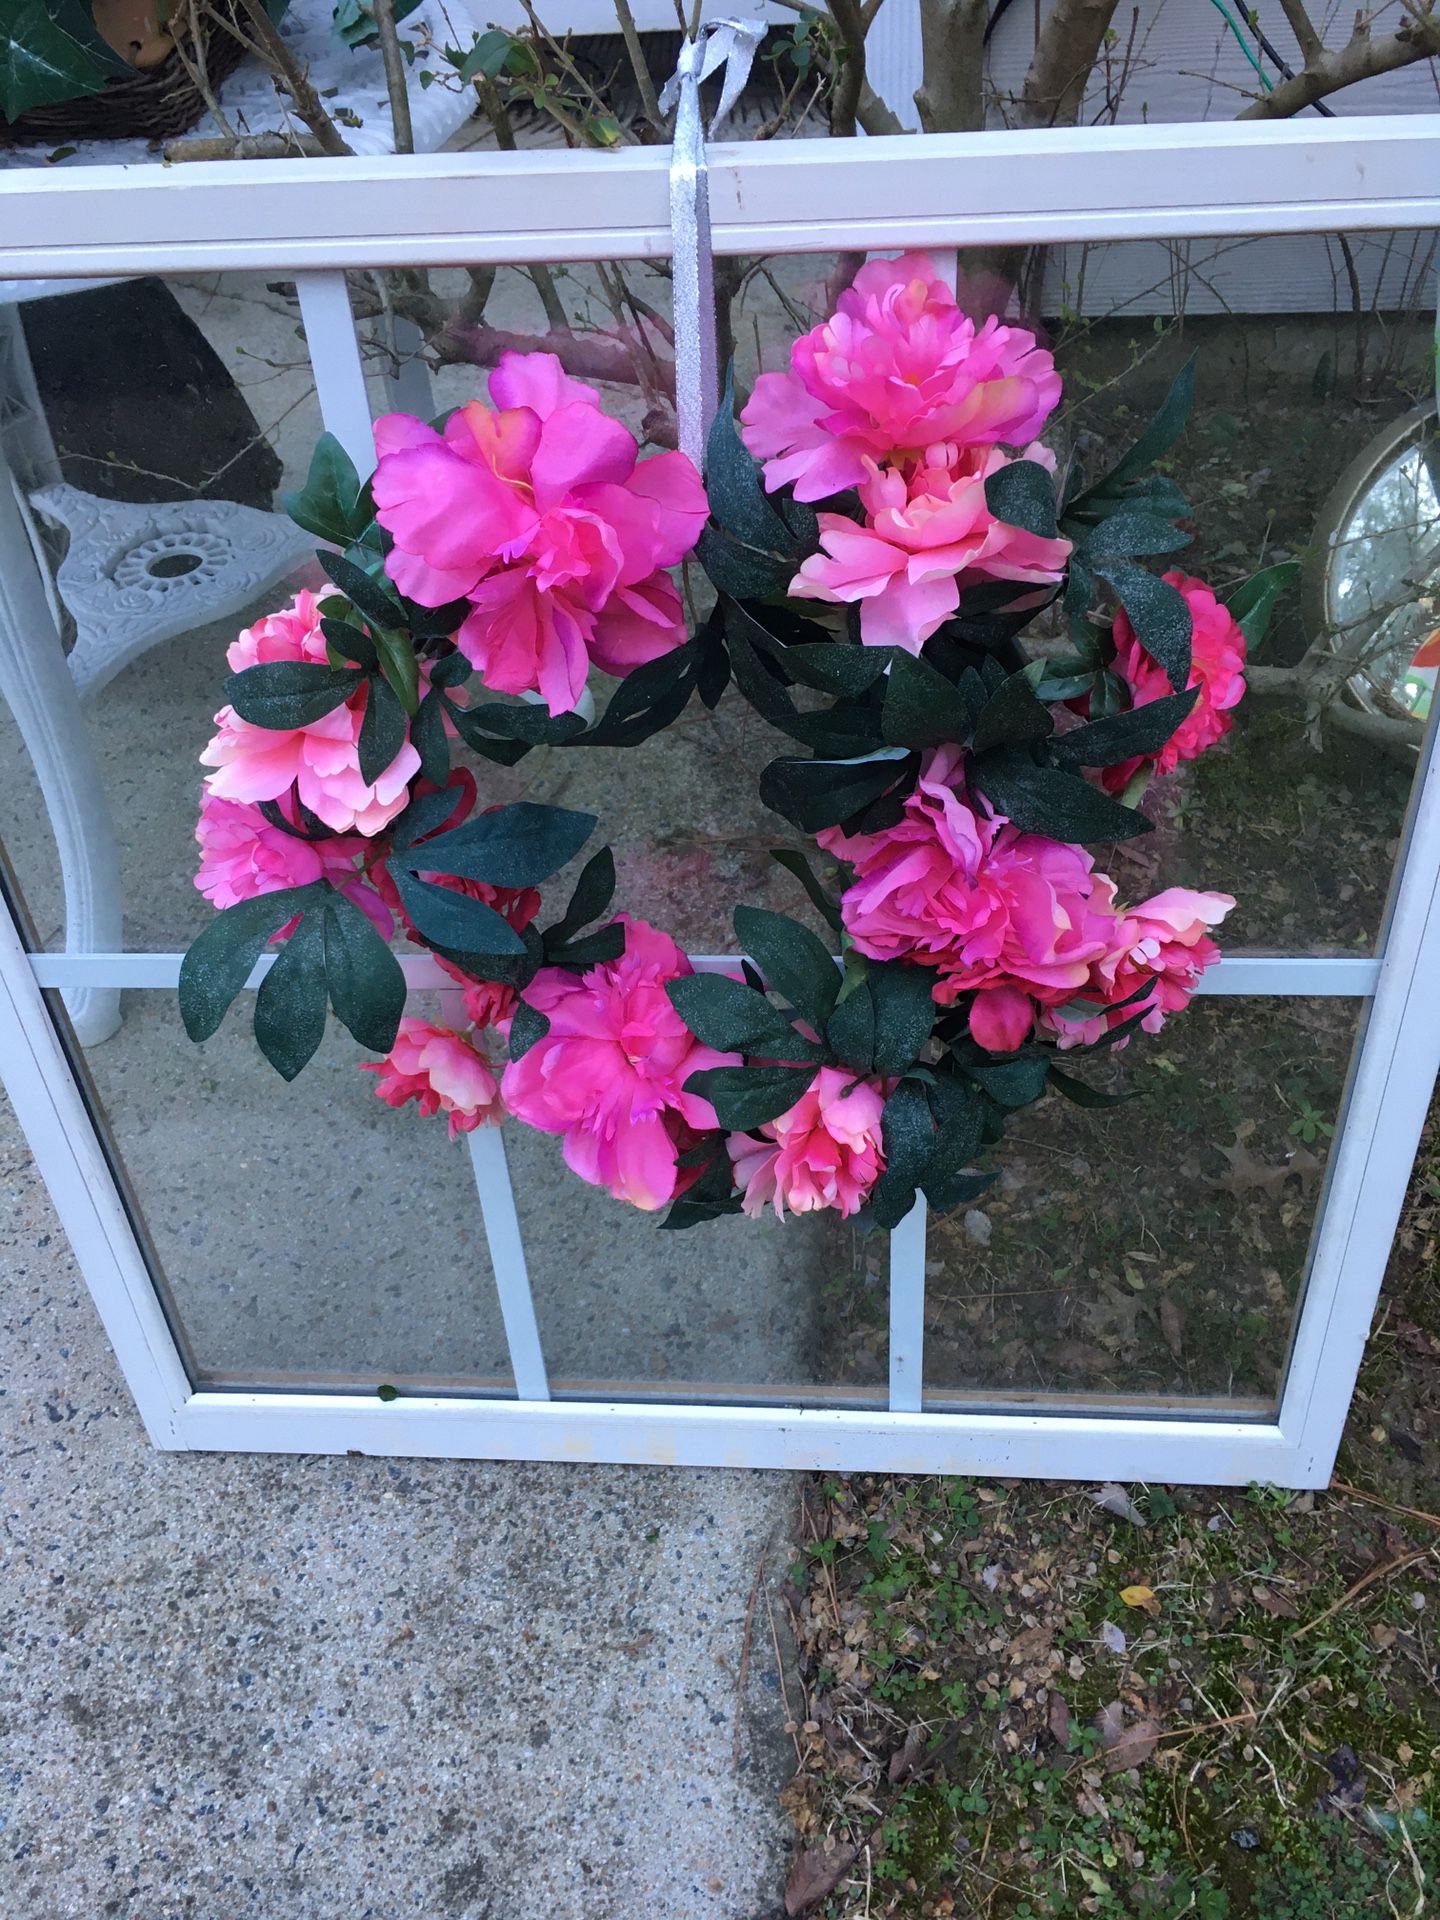 Window Or Wreaths 